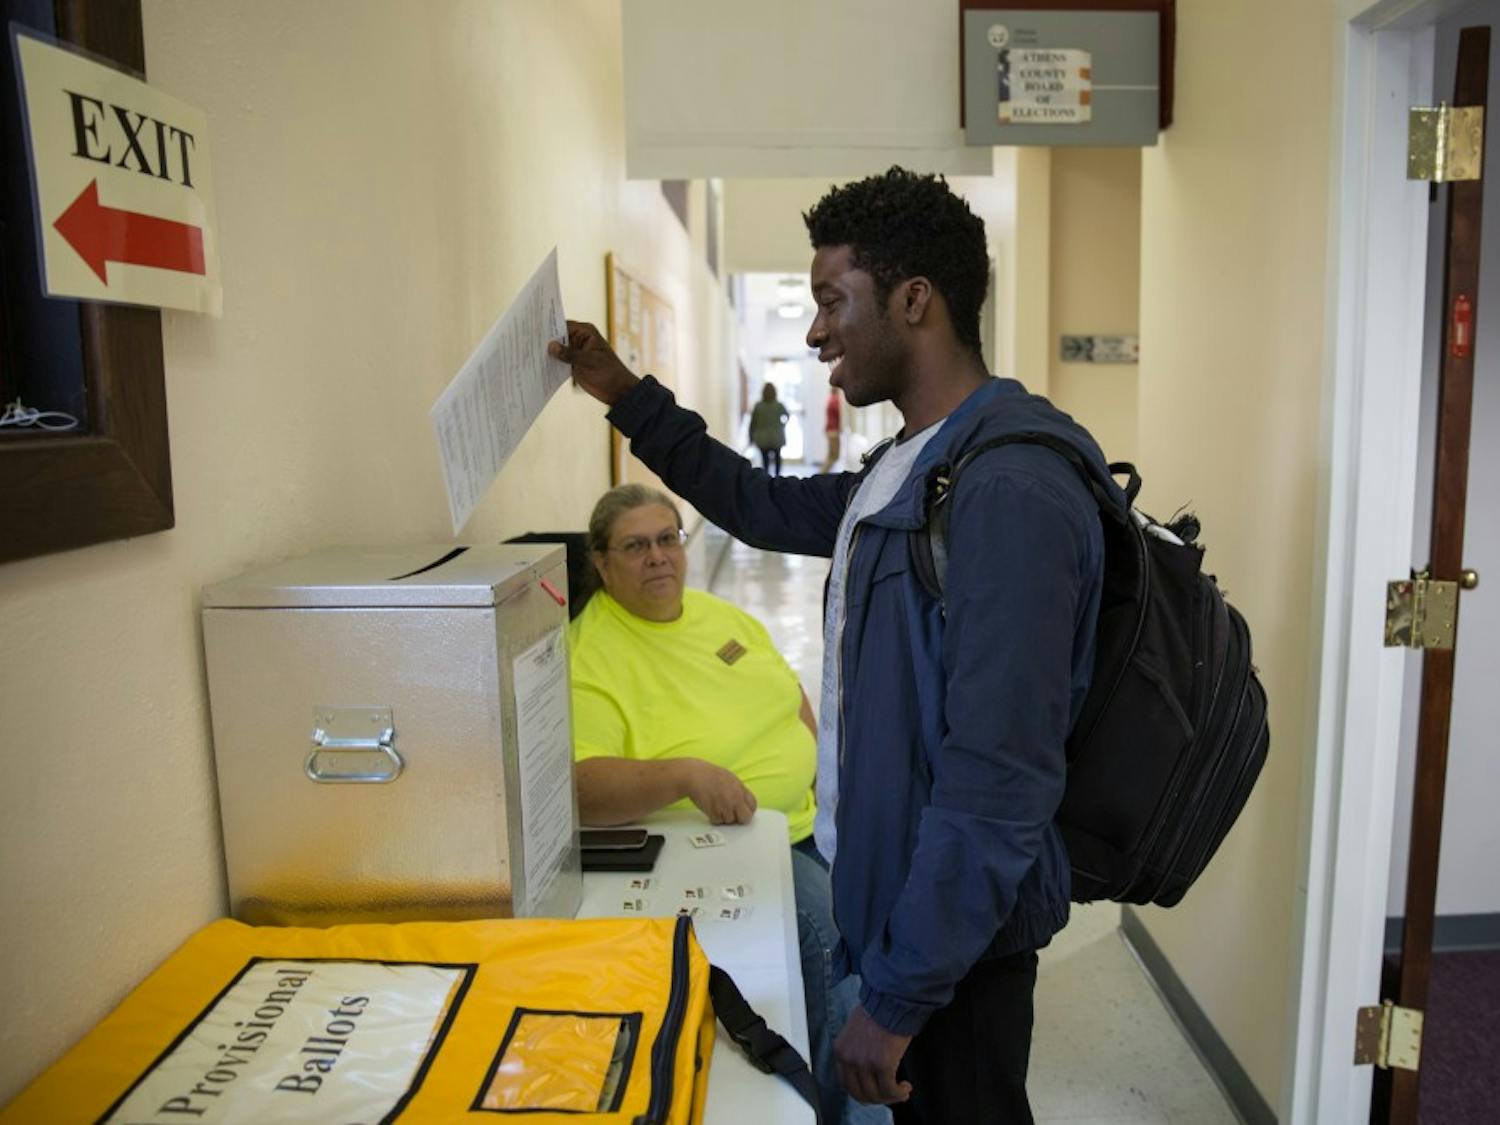 Austin Rivers, a senior from South Carolina, drops his vote in the ballot box on Tuesday. (LIZ MOUGHON | PHOTO EDITOR)